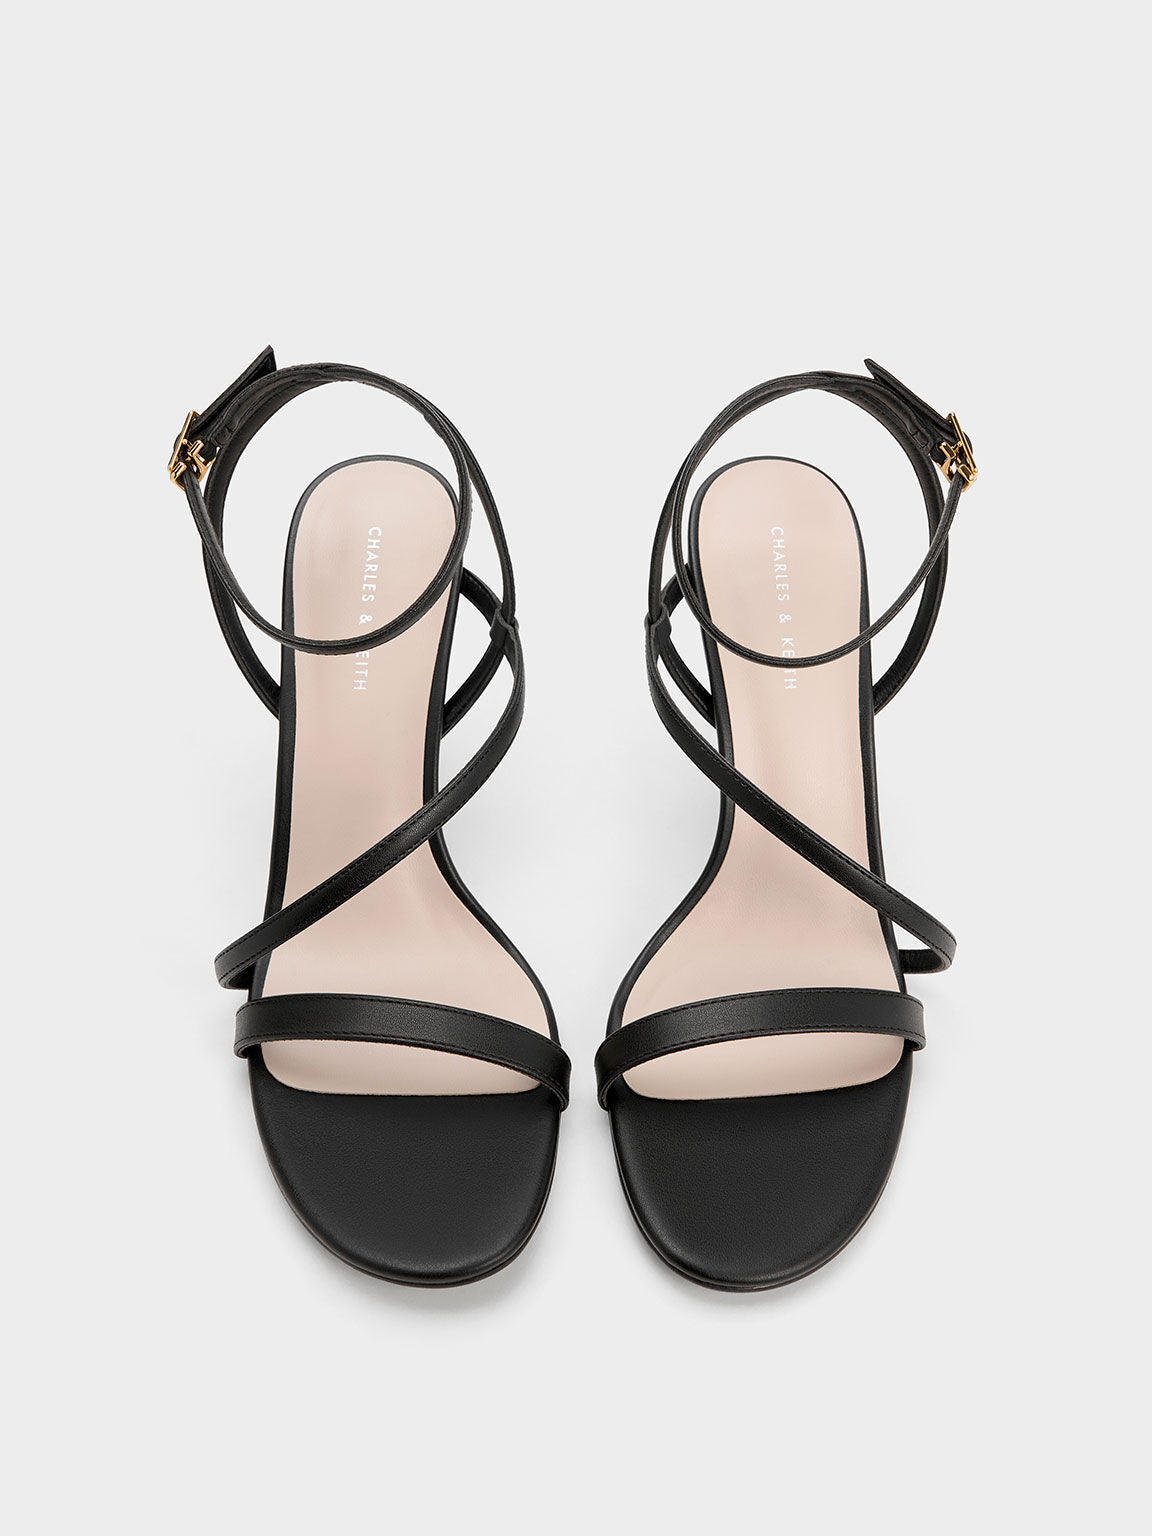 Charles & Keith Women's Metallic Asymmetric Strappy Heeled Sandals